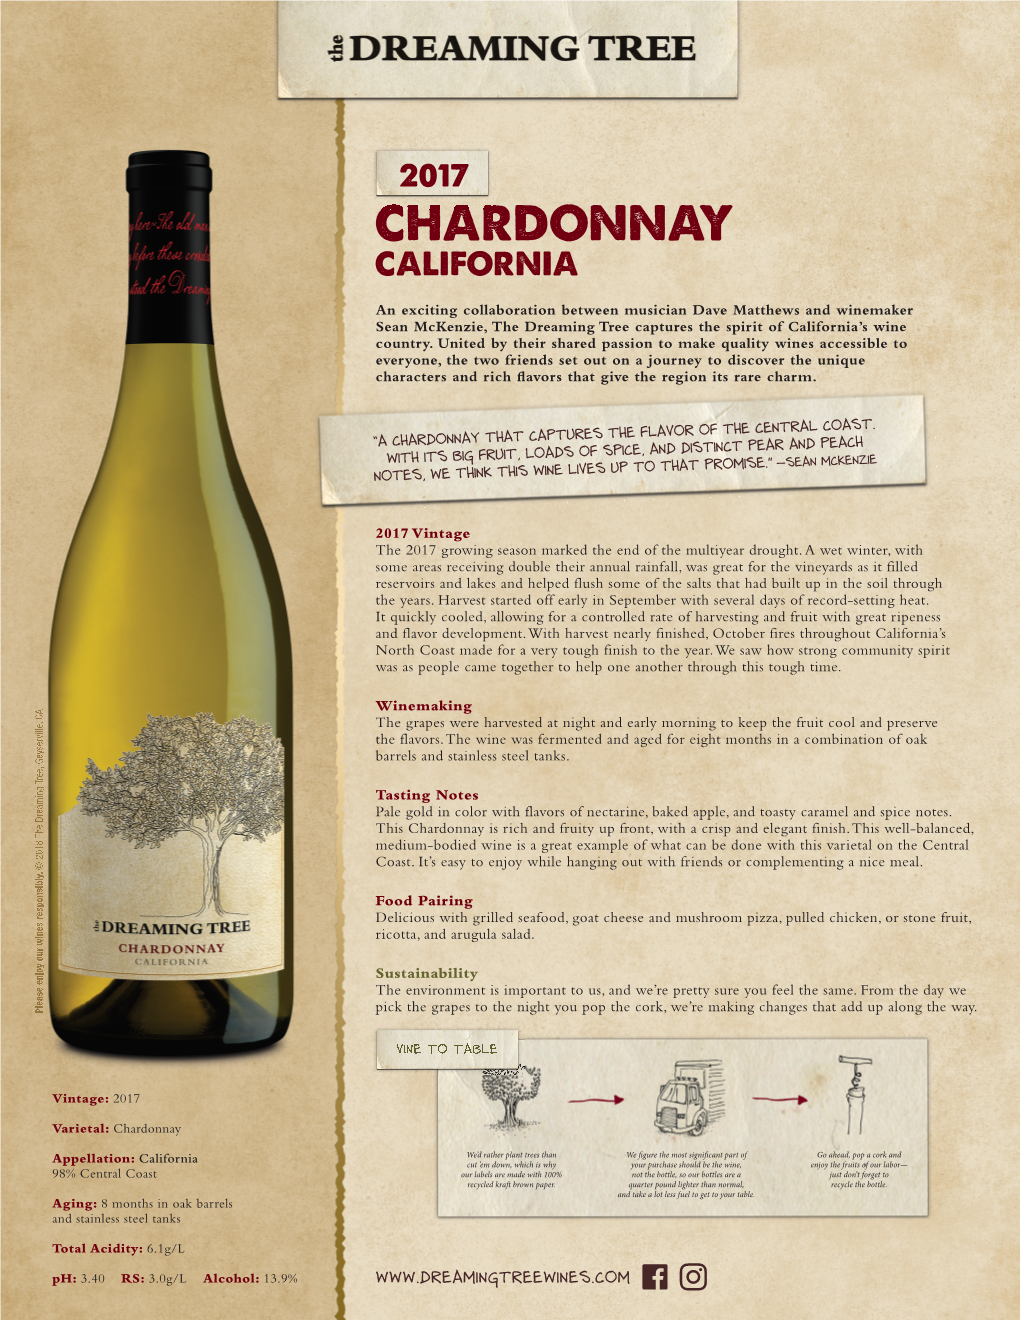 The Dreaming Tree 2017 Chardonnay California Tasting Notes